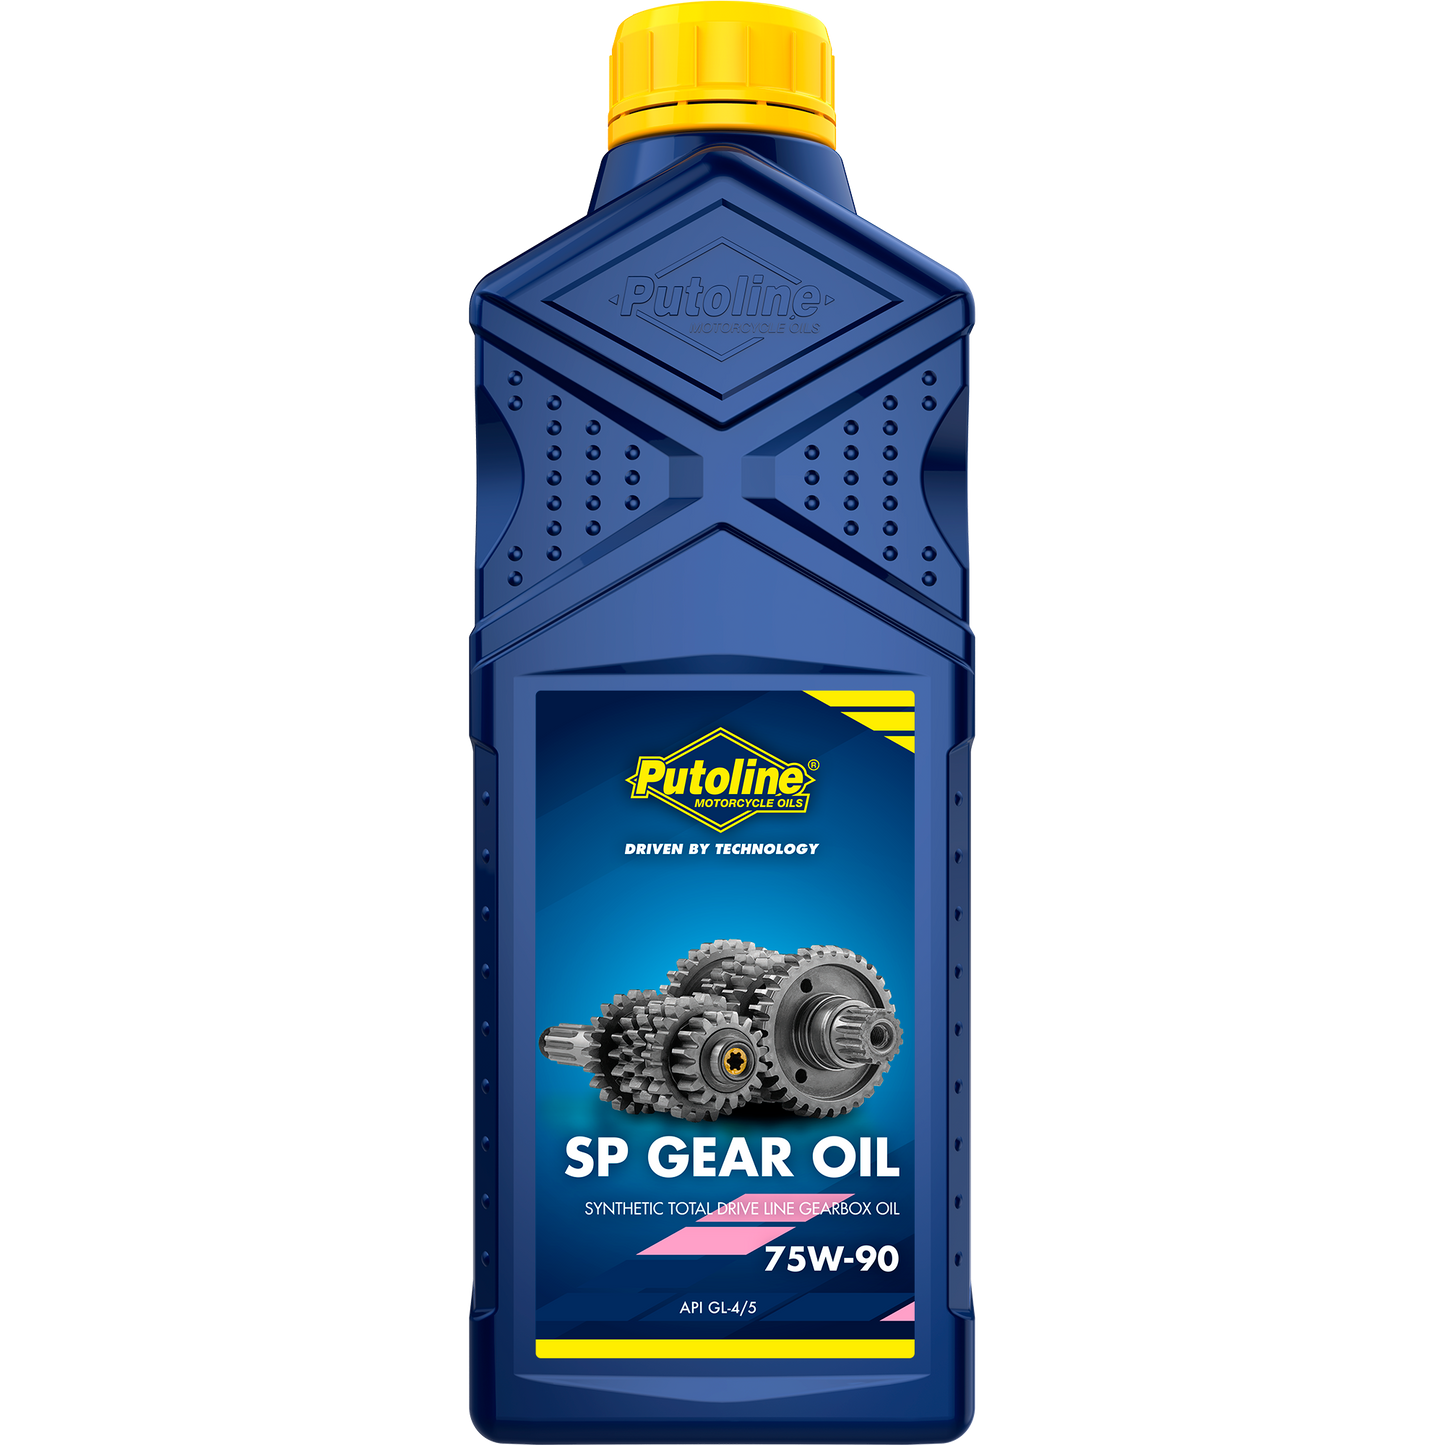 SP Gear Oil